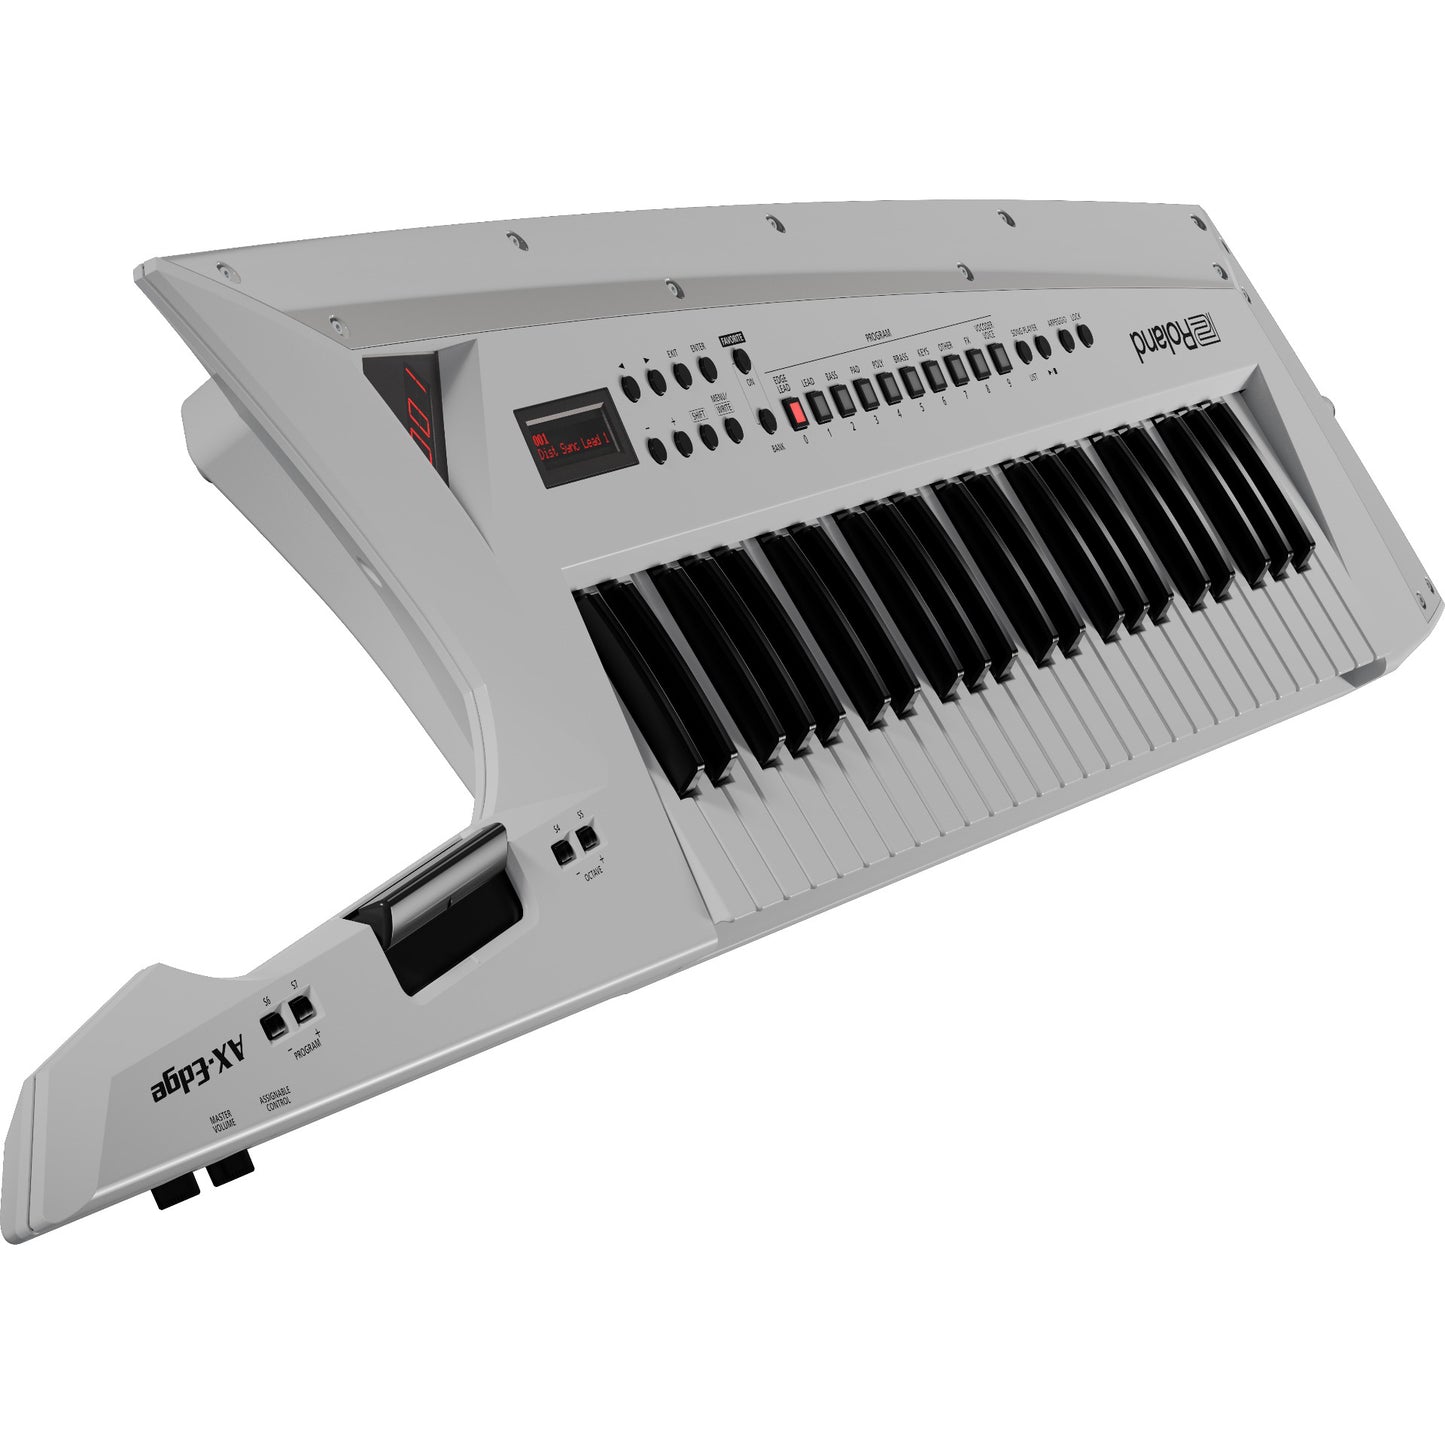 Roland AX-Edge Keytar Synthesizer, White